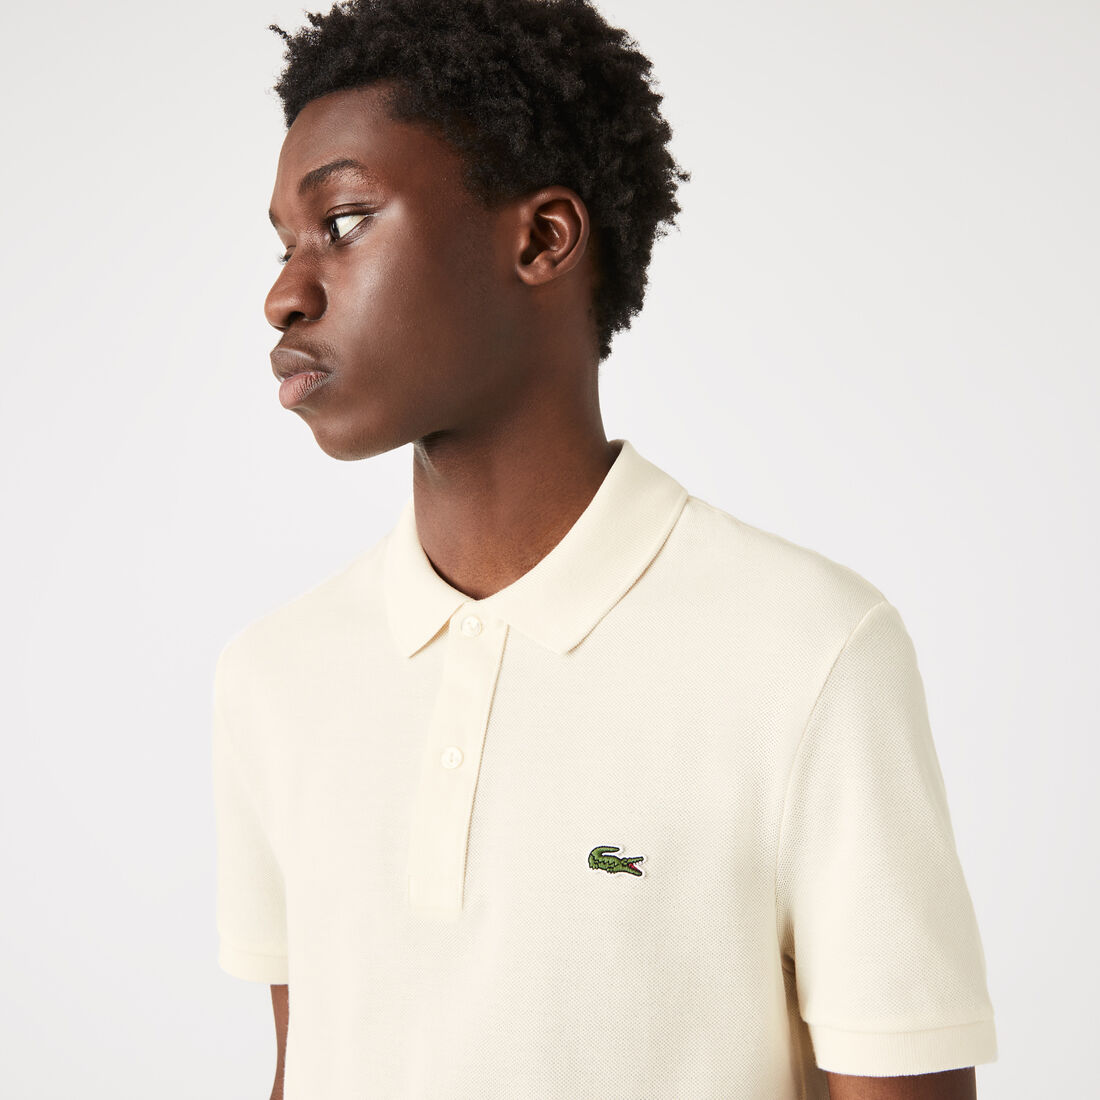 Lacoste Slim Fit In Petit Piqué Polo Shirts Herren Weiß | TISN-98045